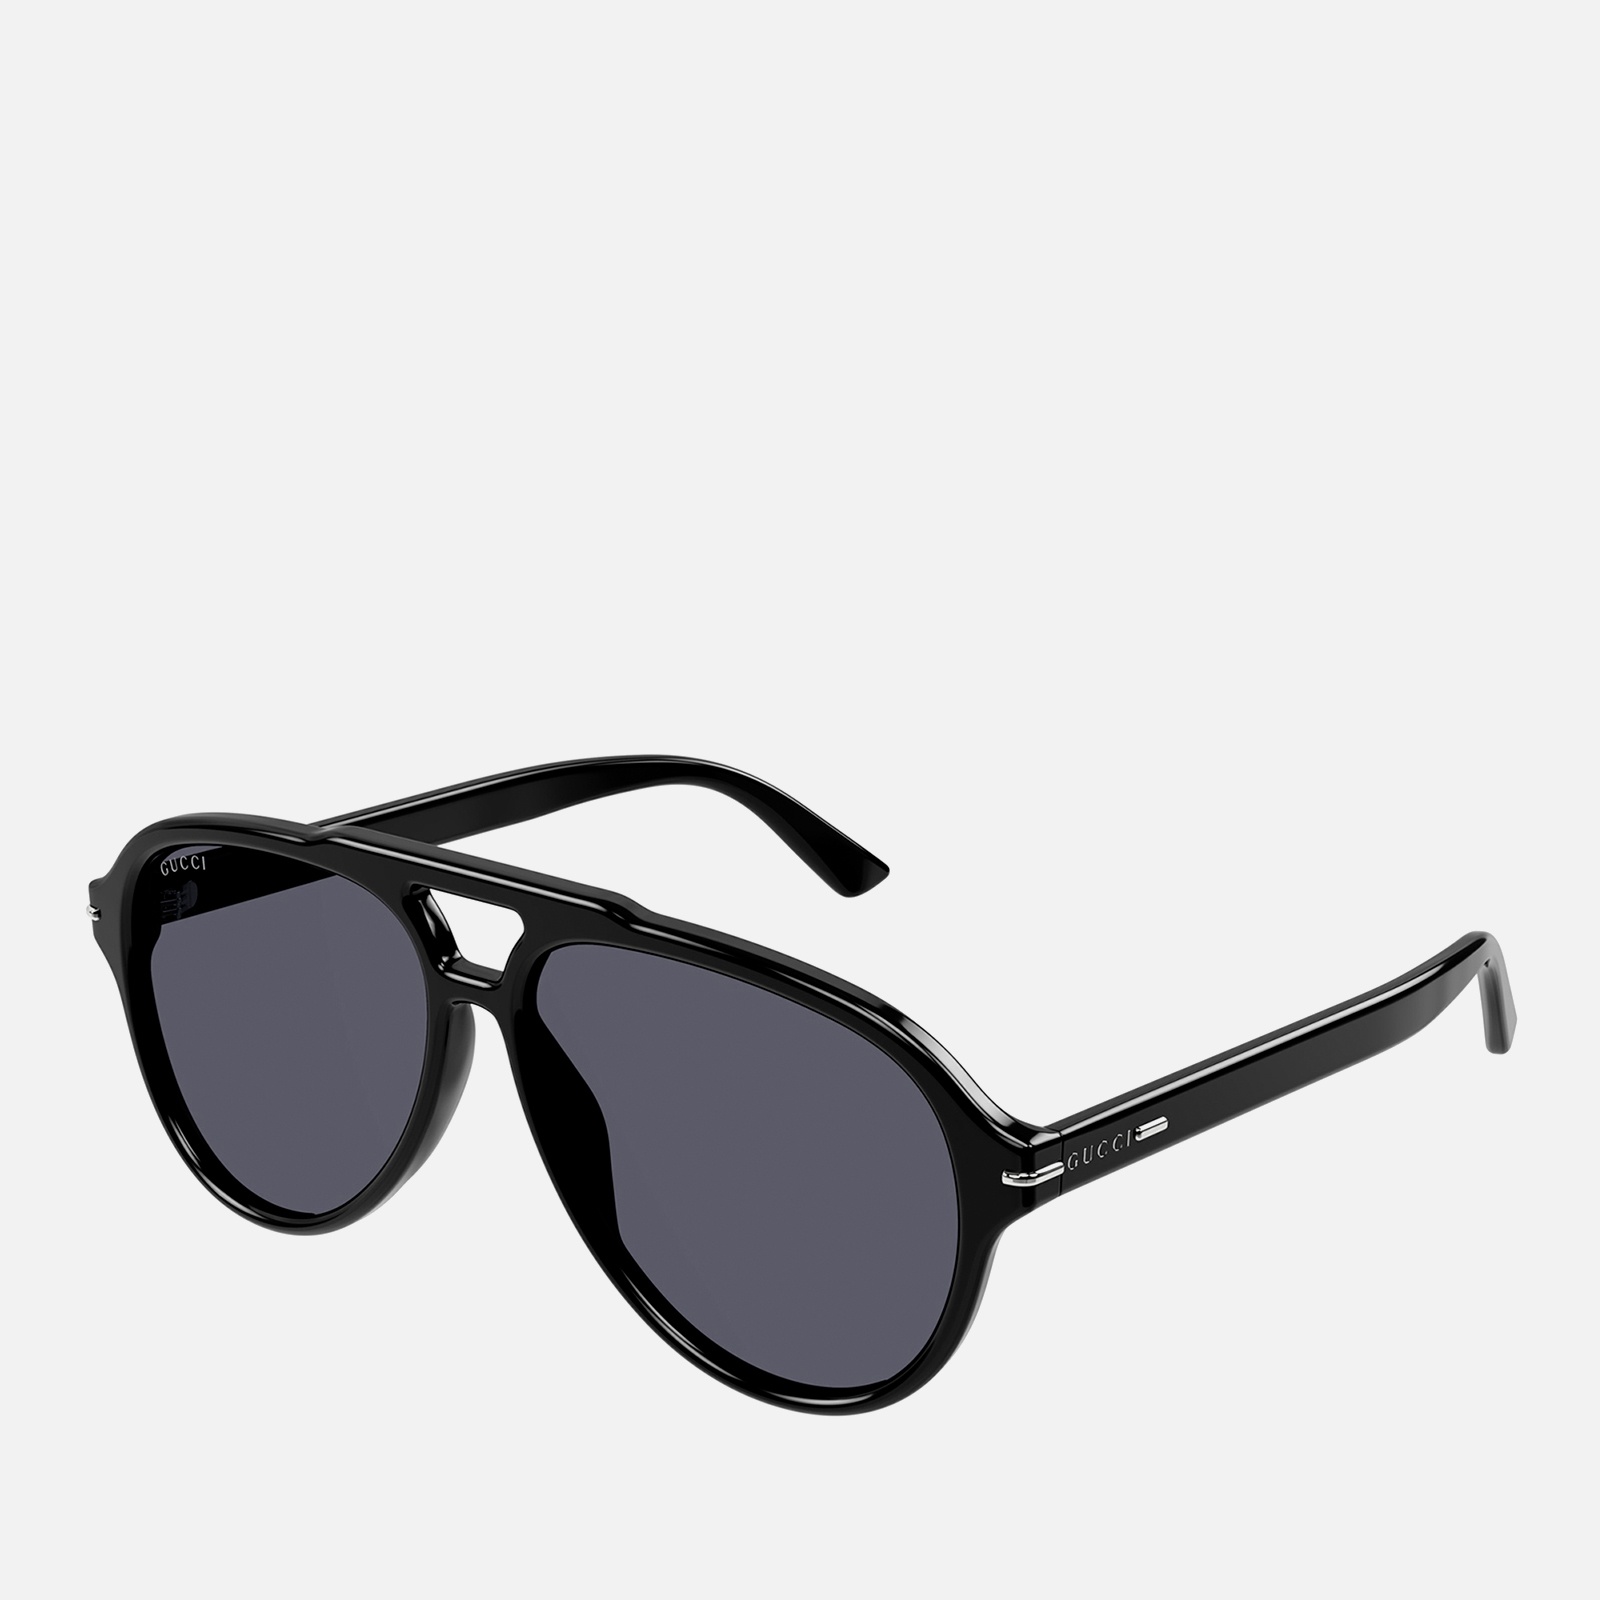 Gucci Men's Recycled Acetate Aviator Sunglasses - Black/Grey - 1